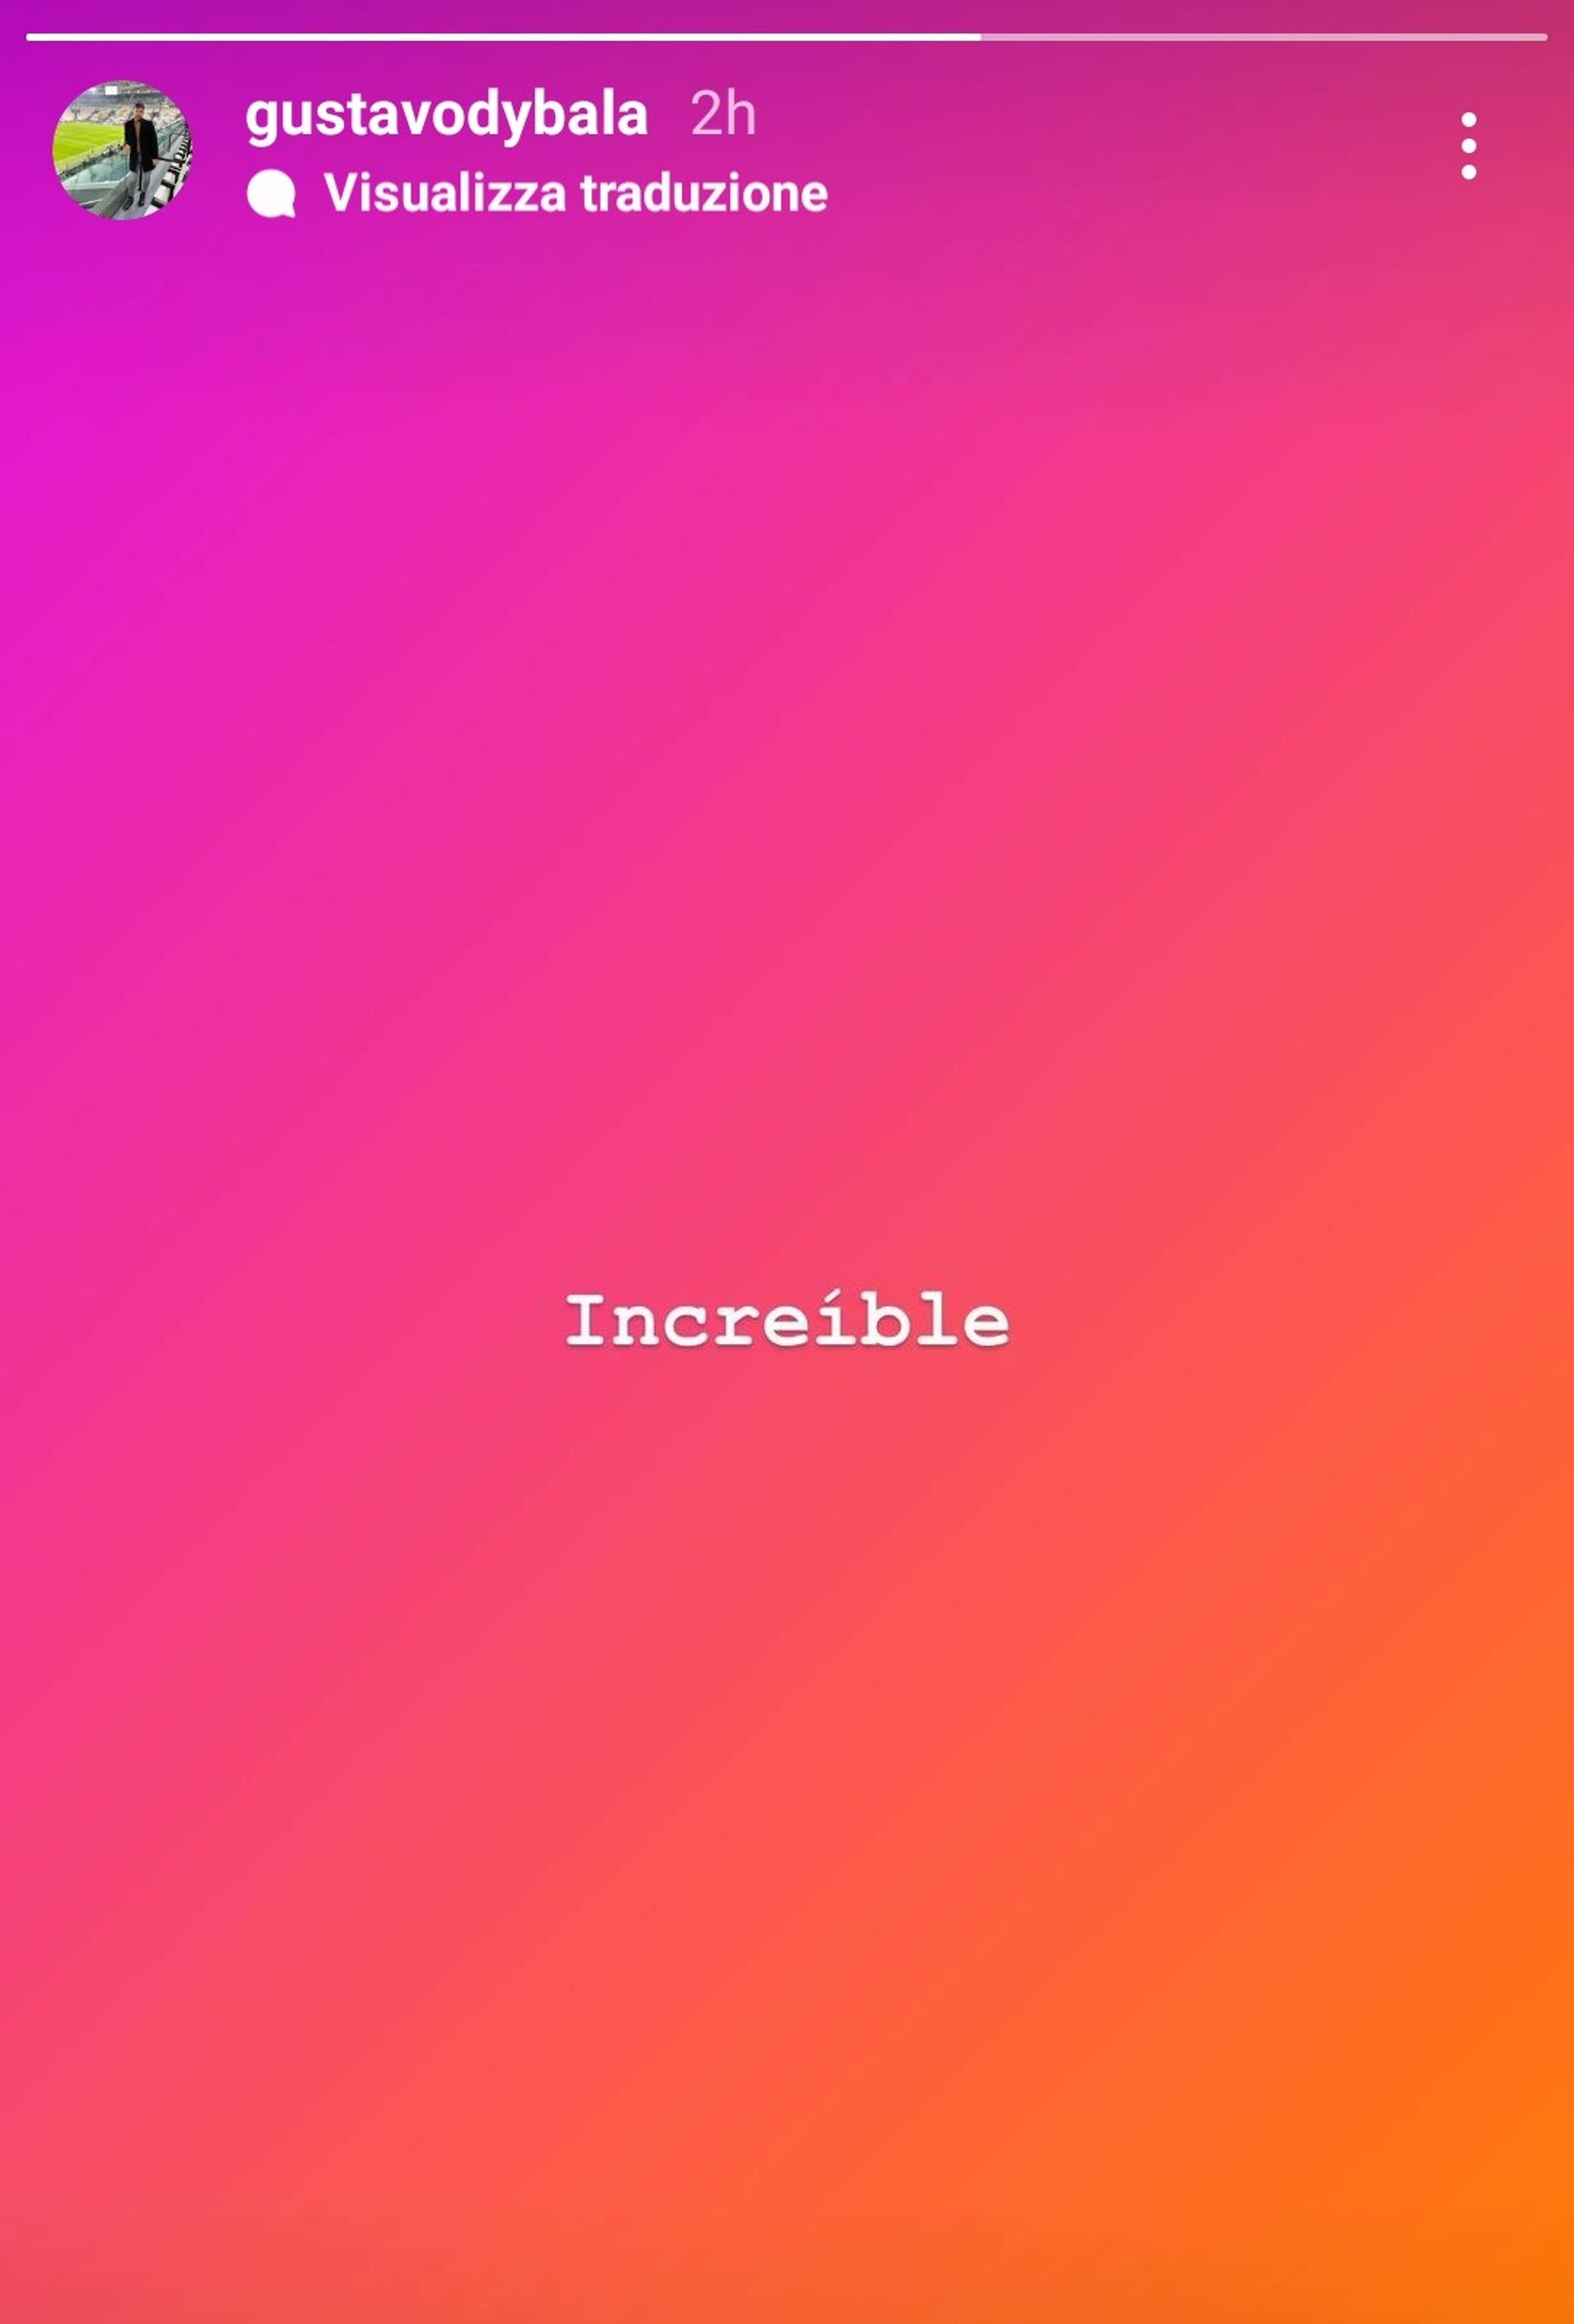 Gustavo Dybala Instagram Story